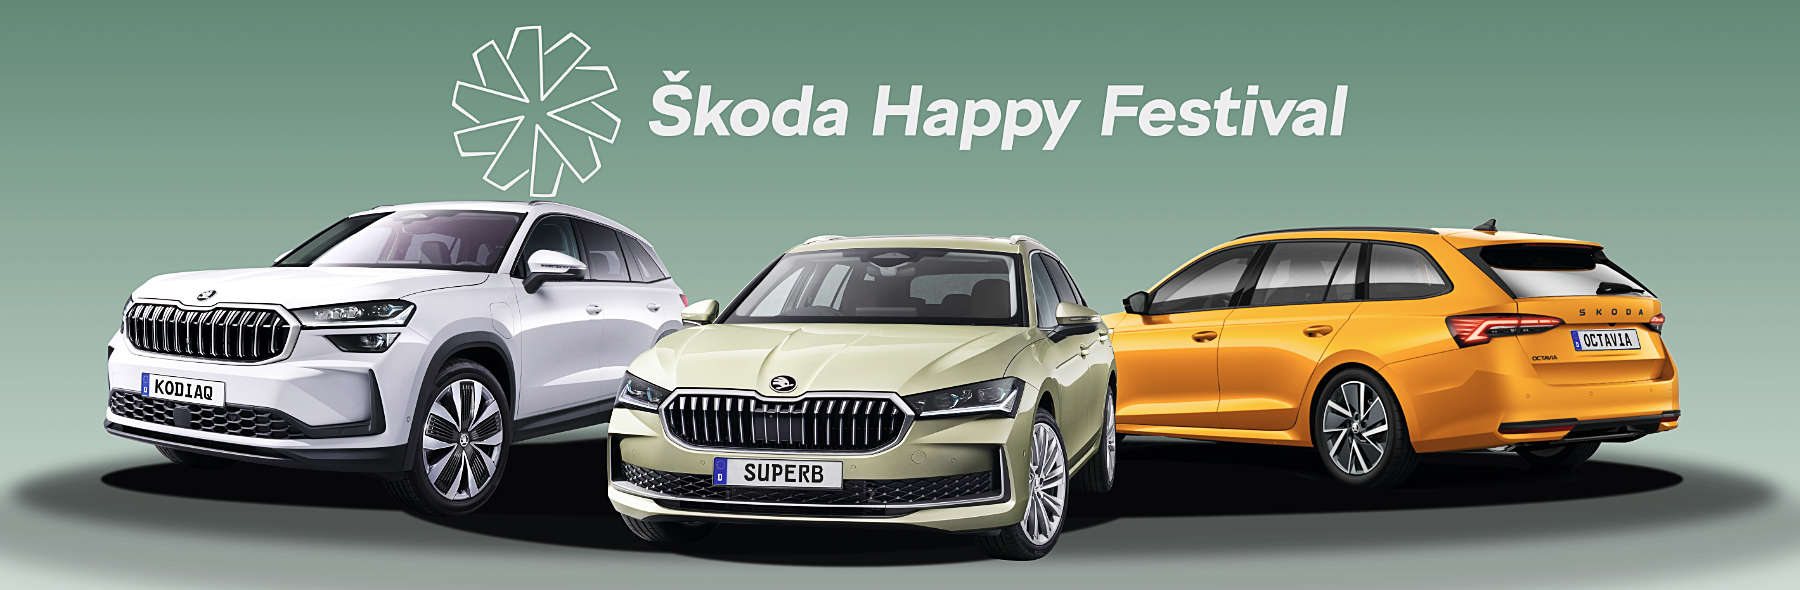 Willkommen zum Škoda Happy Festival bei Automobile Müller